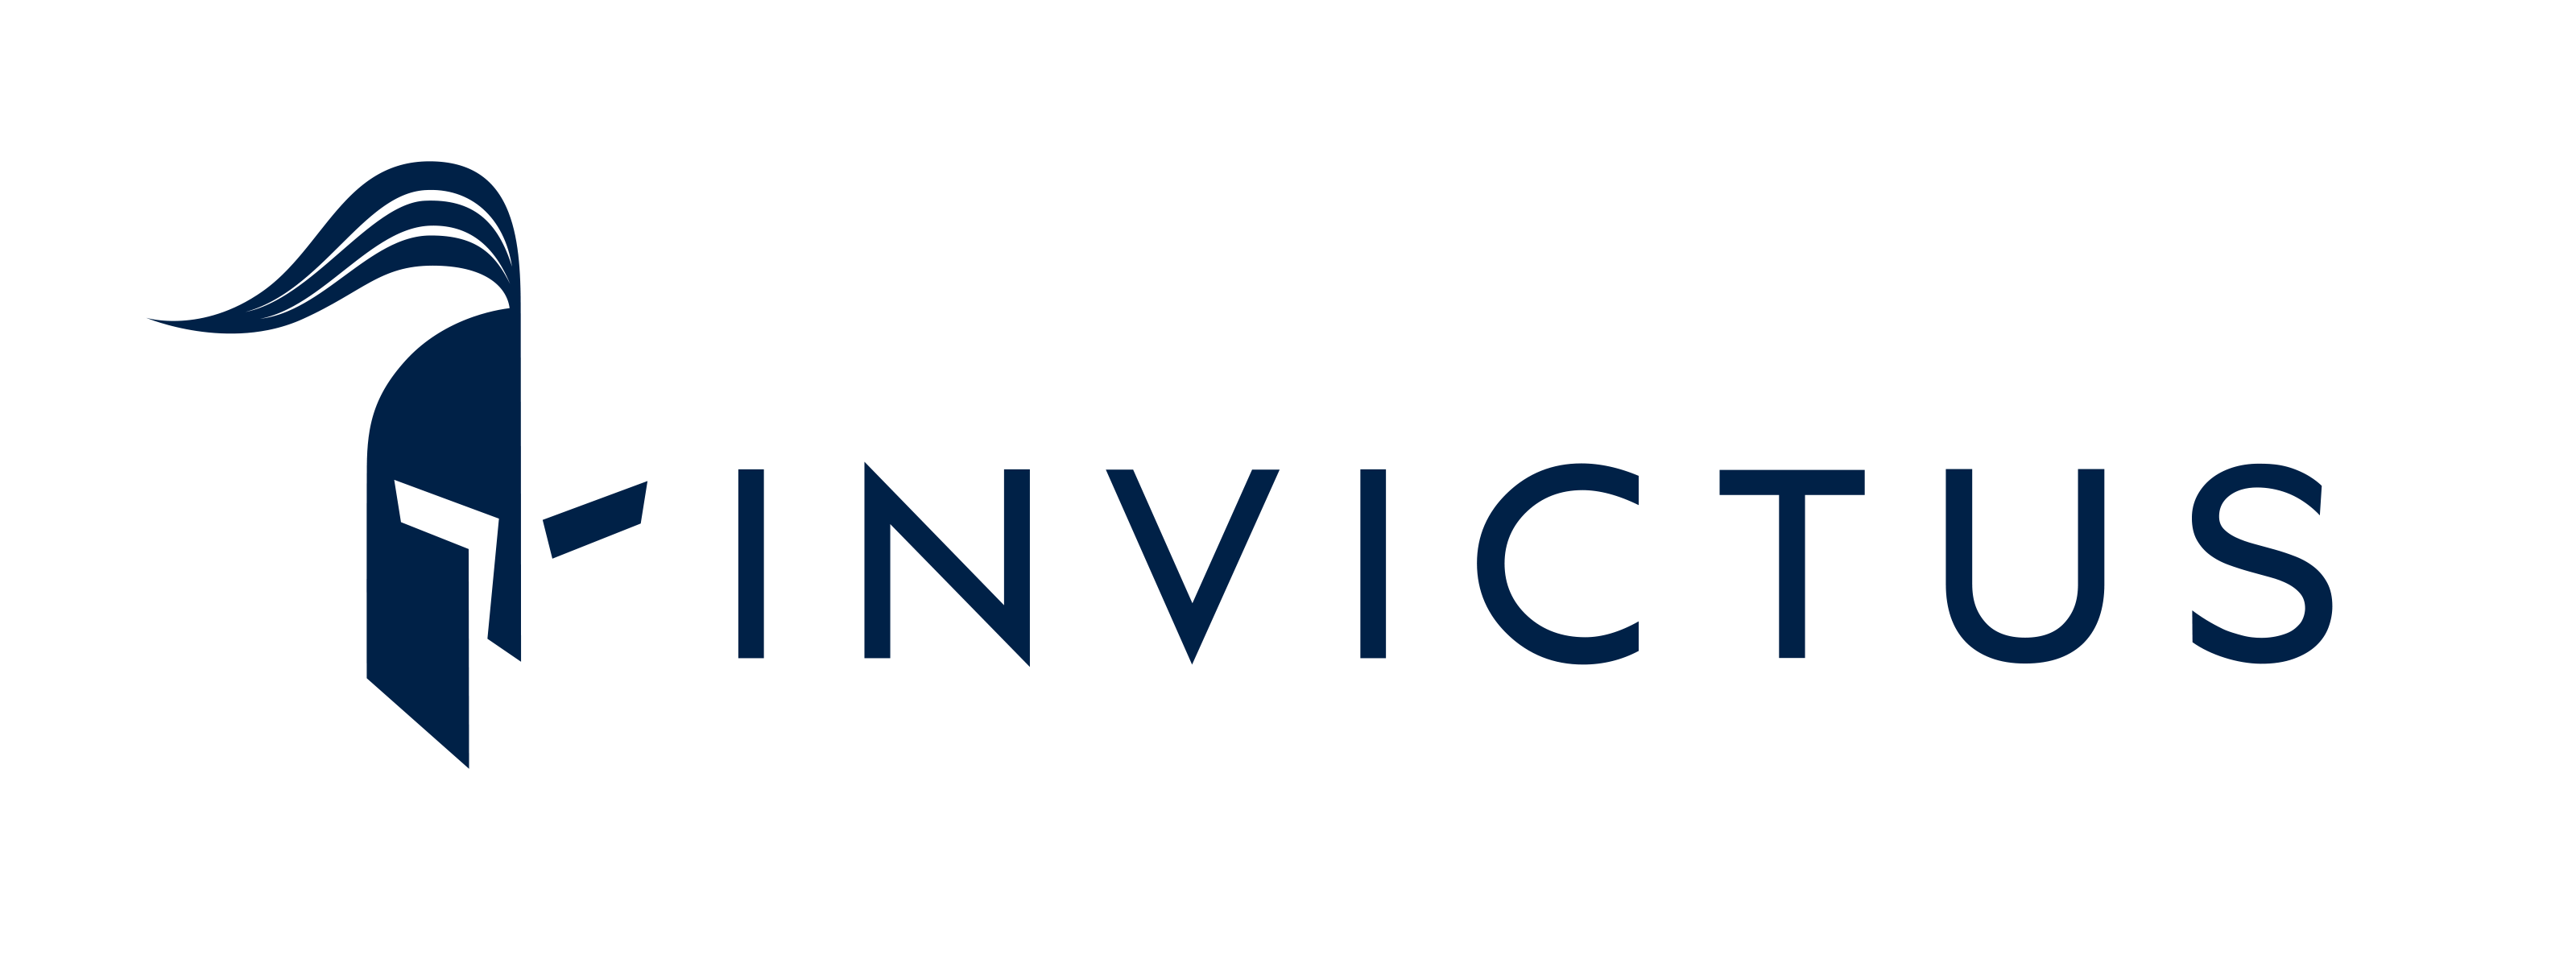 invictus logo - navy for light bg.png